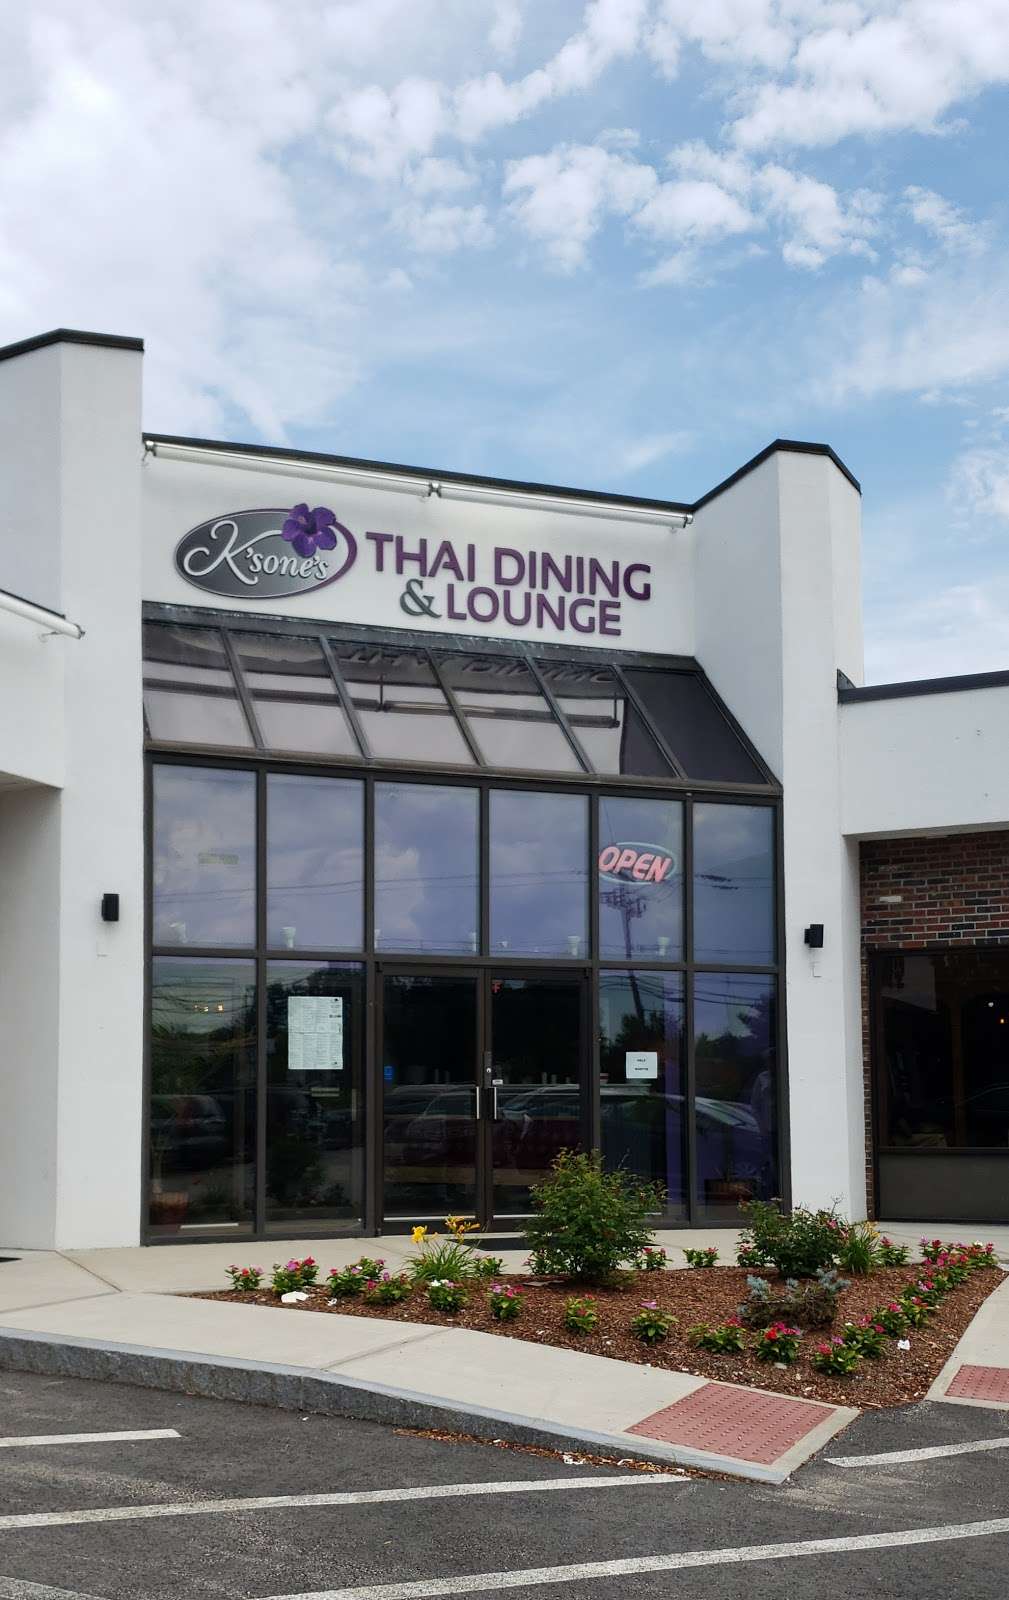 Ksones Thai Dining & Lounge | 493 Amherst St Ste 6, Nashua, NH 03063 | Phone: (603) 459-8621